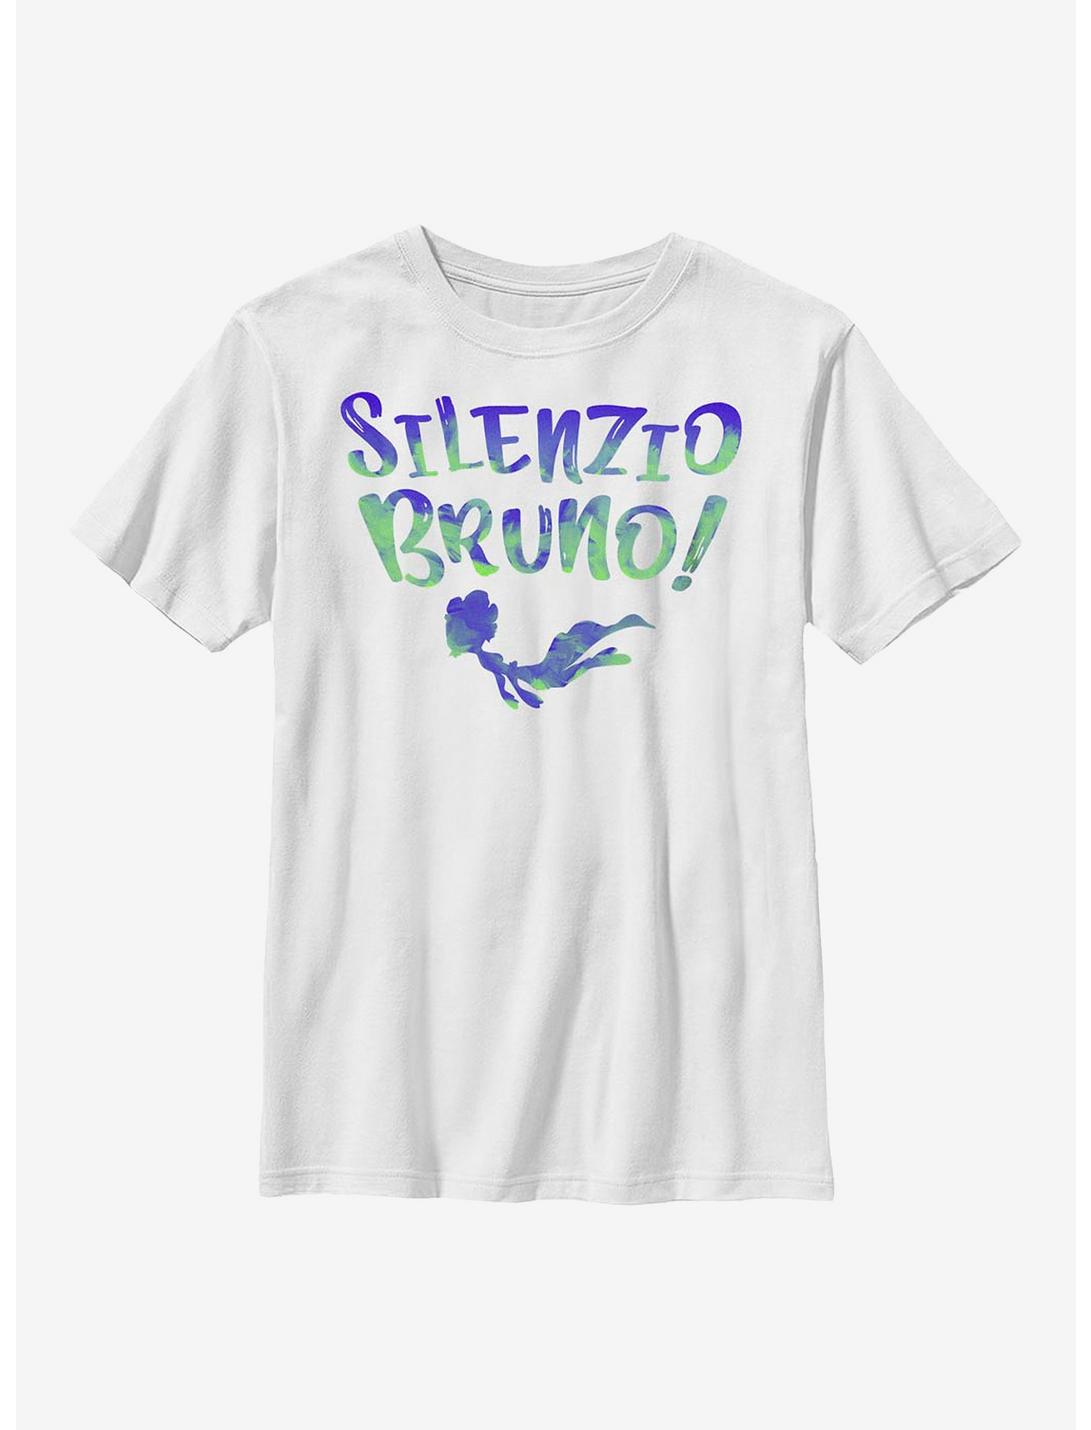 Disney Pixar Silenzio Bruno! Colorful Youth T-Shirt, WHITE, hi-res